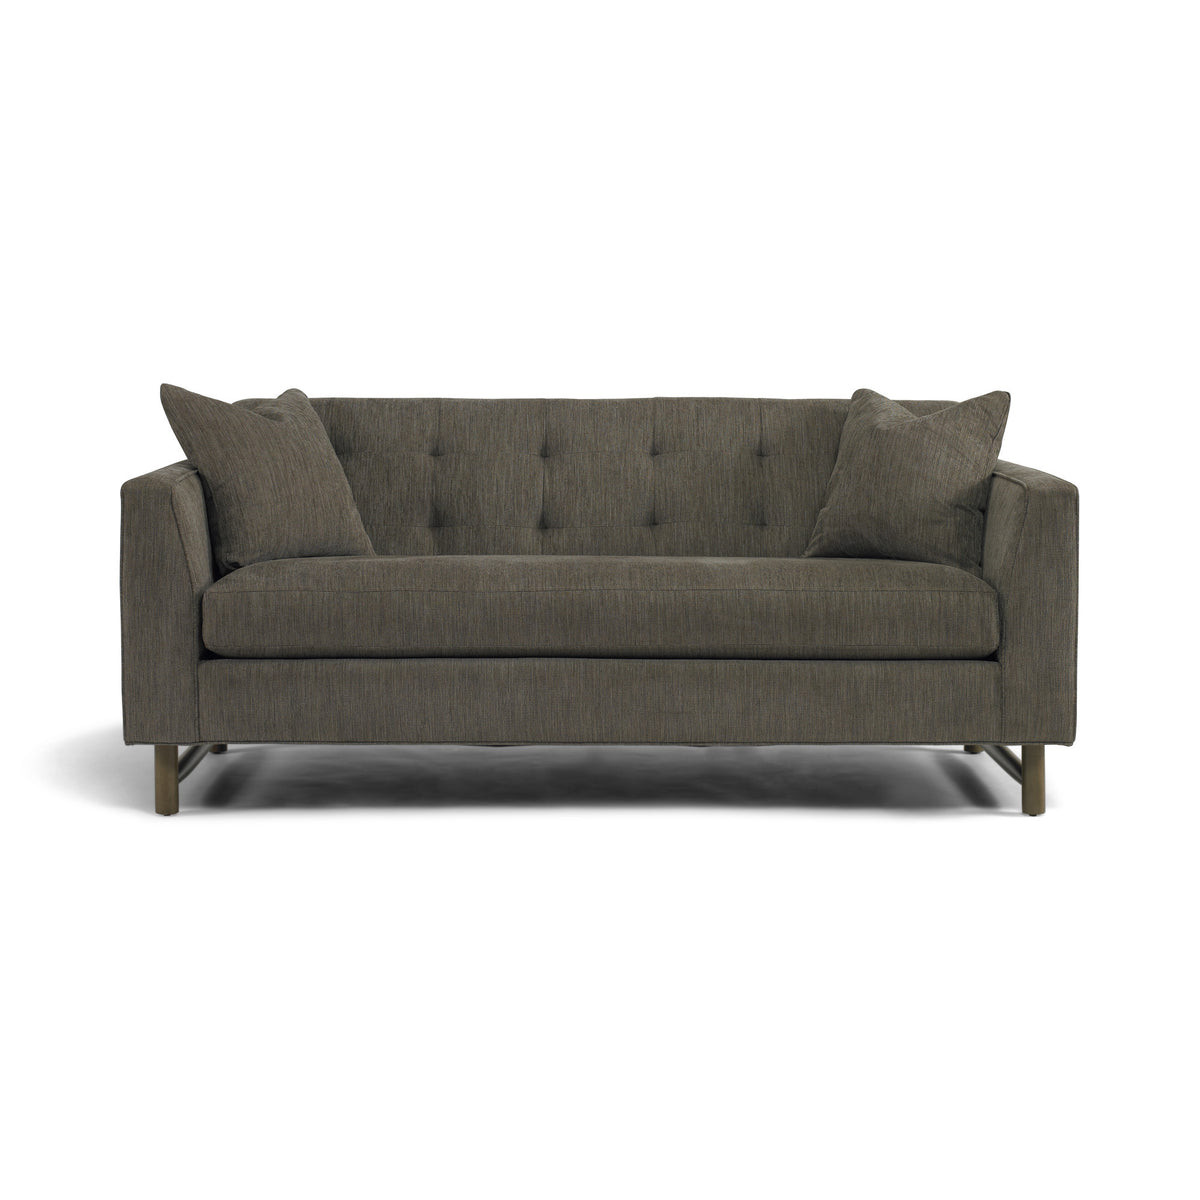 Precedent Furniture Keaton Apartment Sofa Love Seat in Olive Grey with Walnut Legs